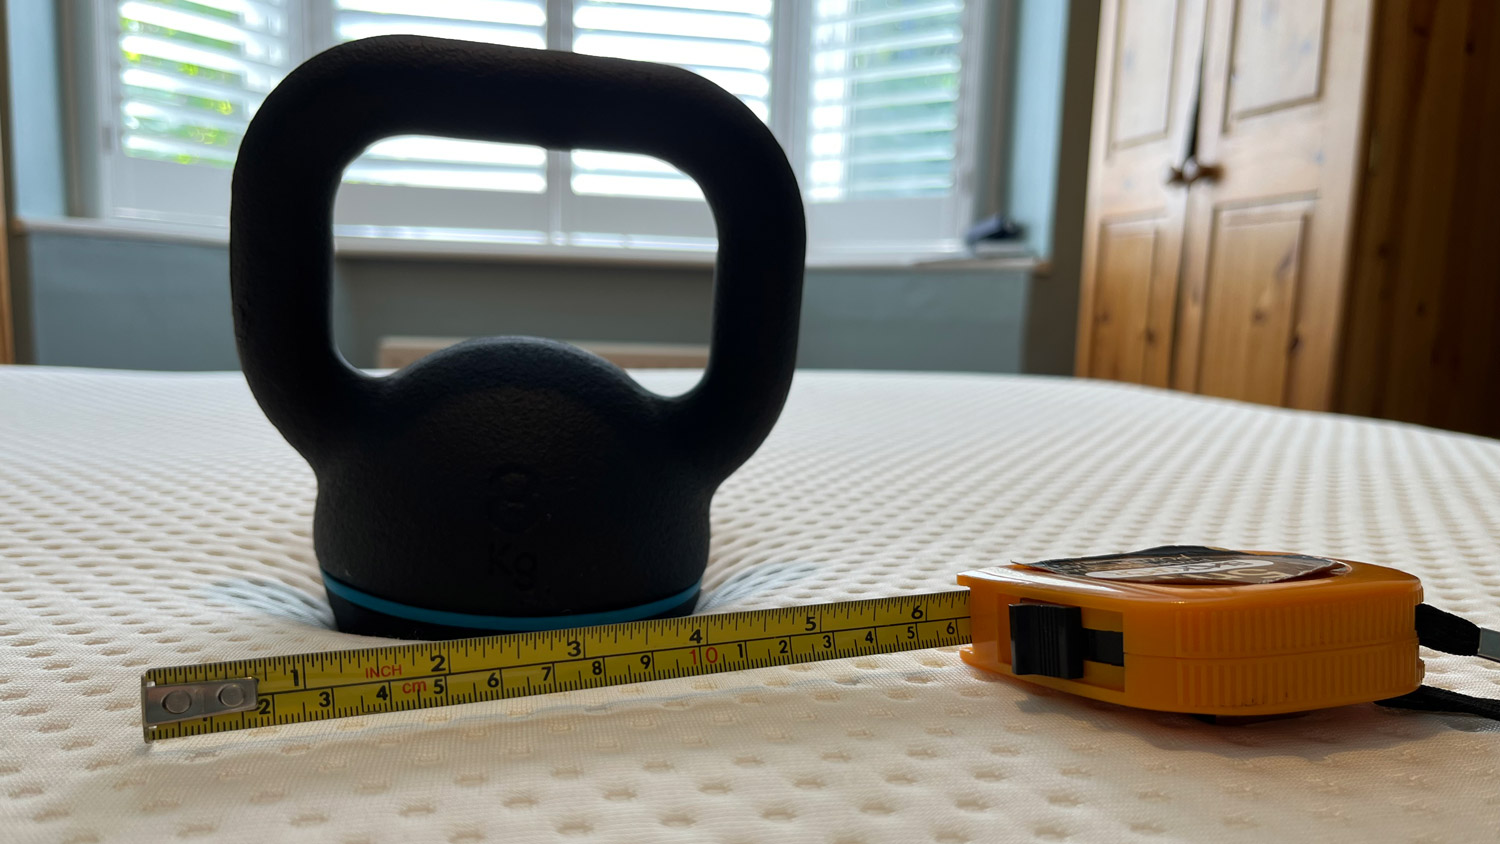 A kettlebell and tape measure on the Emma NextGen Premium